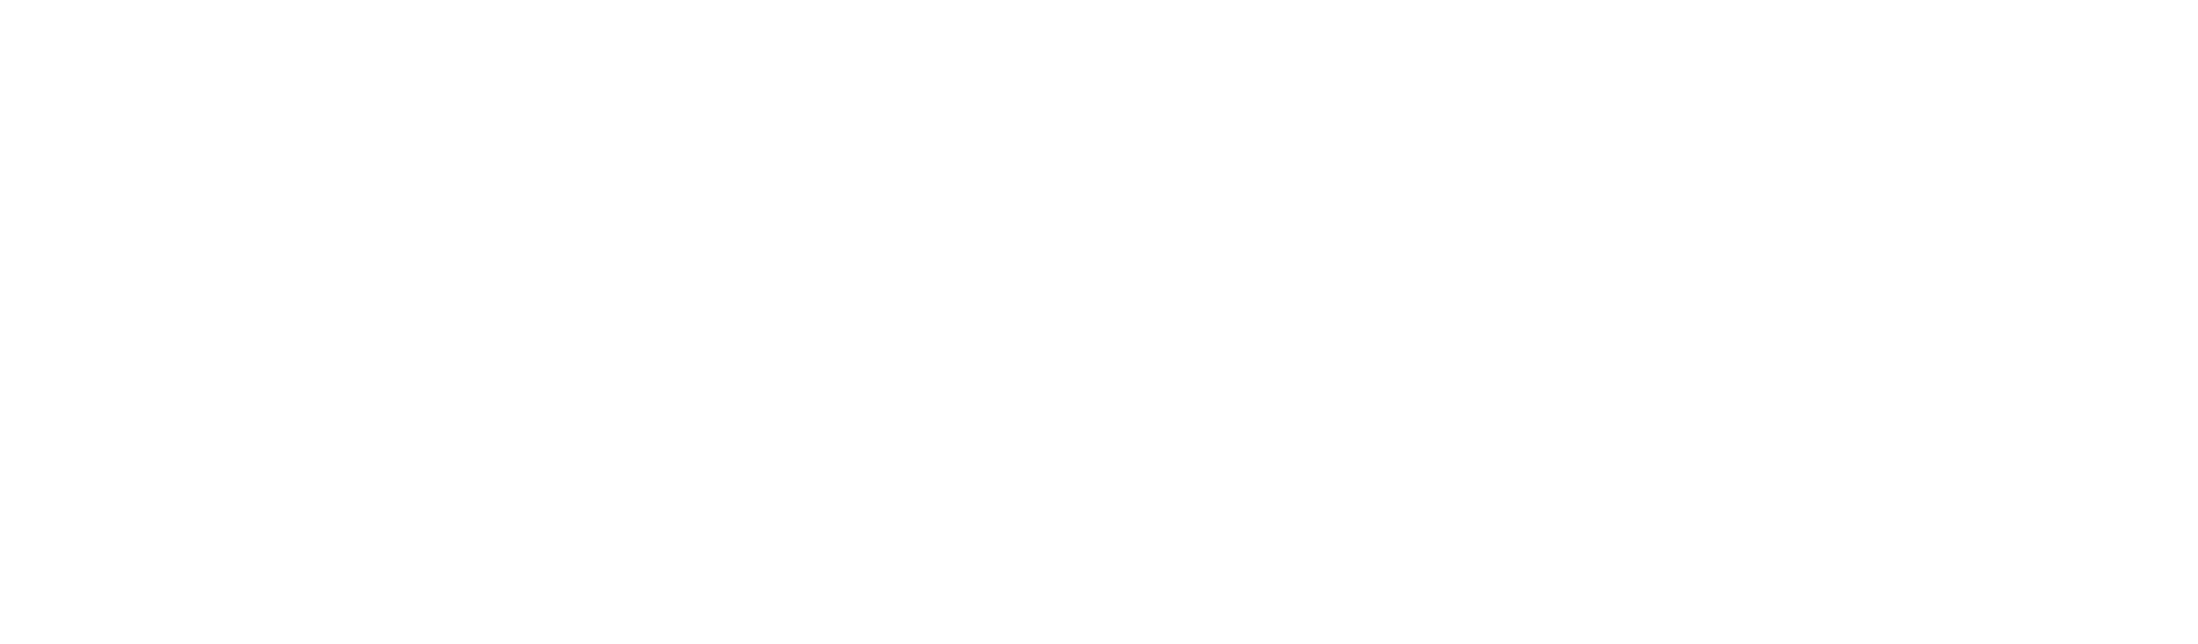 Connetix Marketing Logo